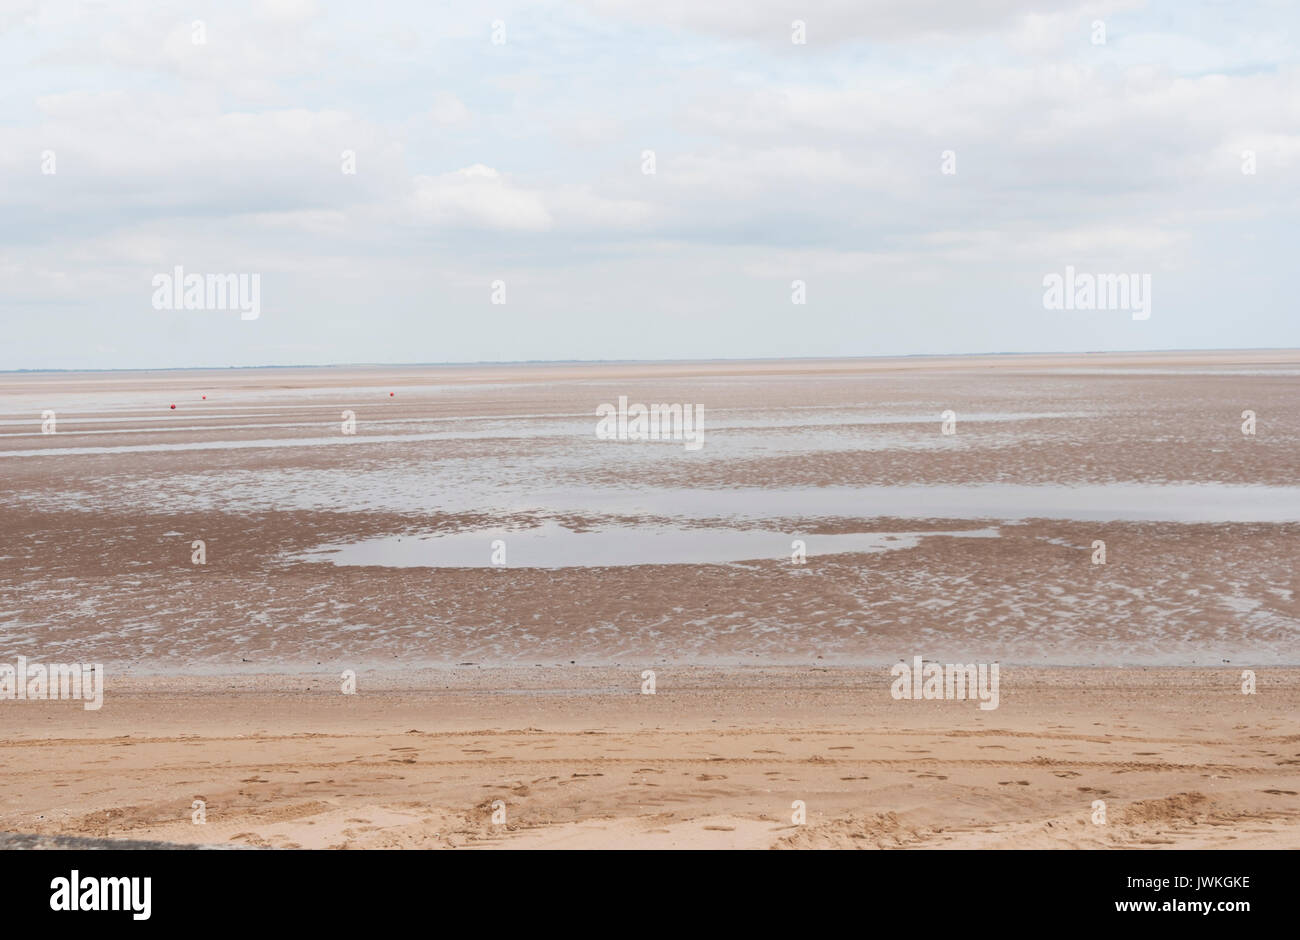 Abandoned Beach, Seaside, Sand, Derelict, Tide Out, Landscape, Summertime, Unoccupied Beach, Imprints in Sand, Coastline, England, Sea, Deserted Land Stock Photo